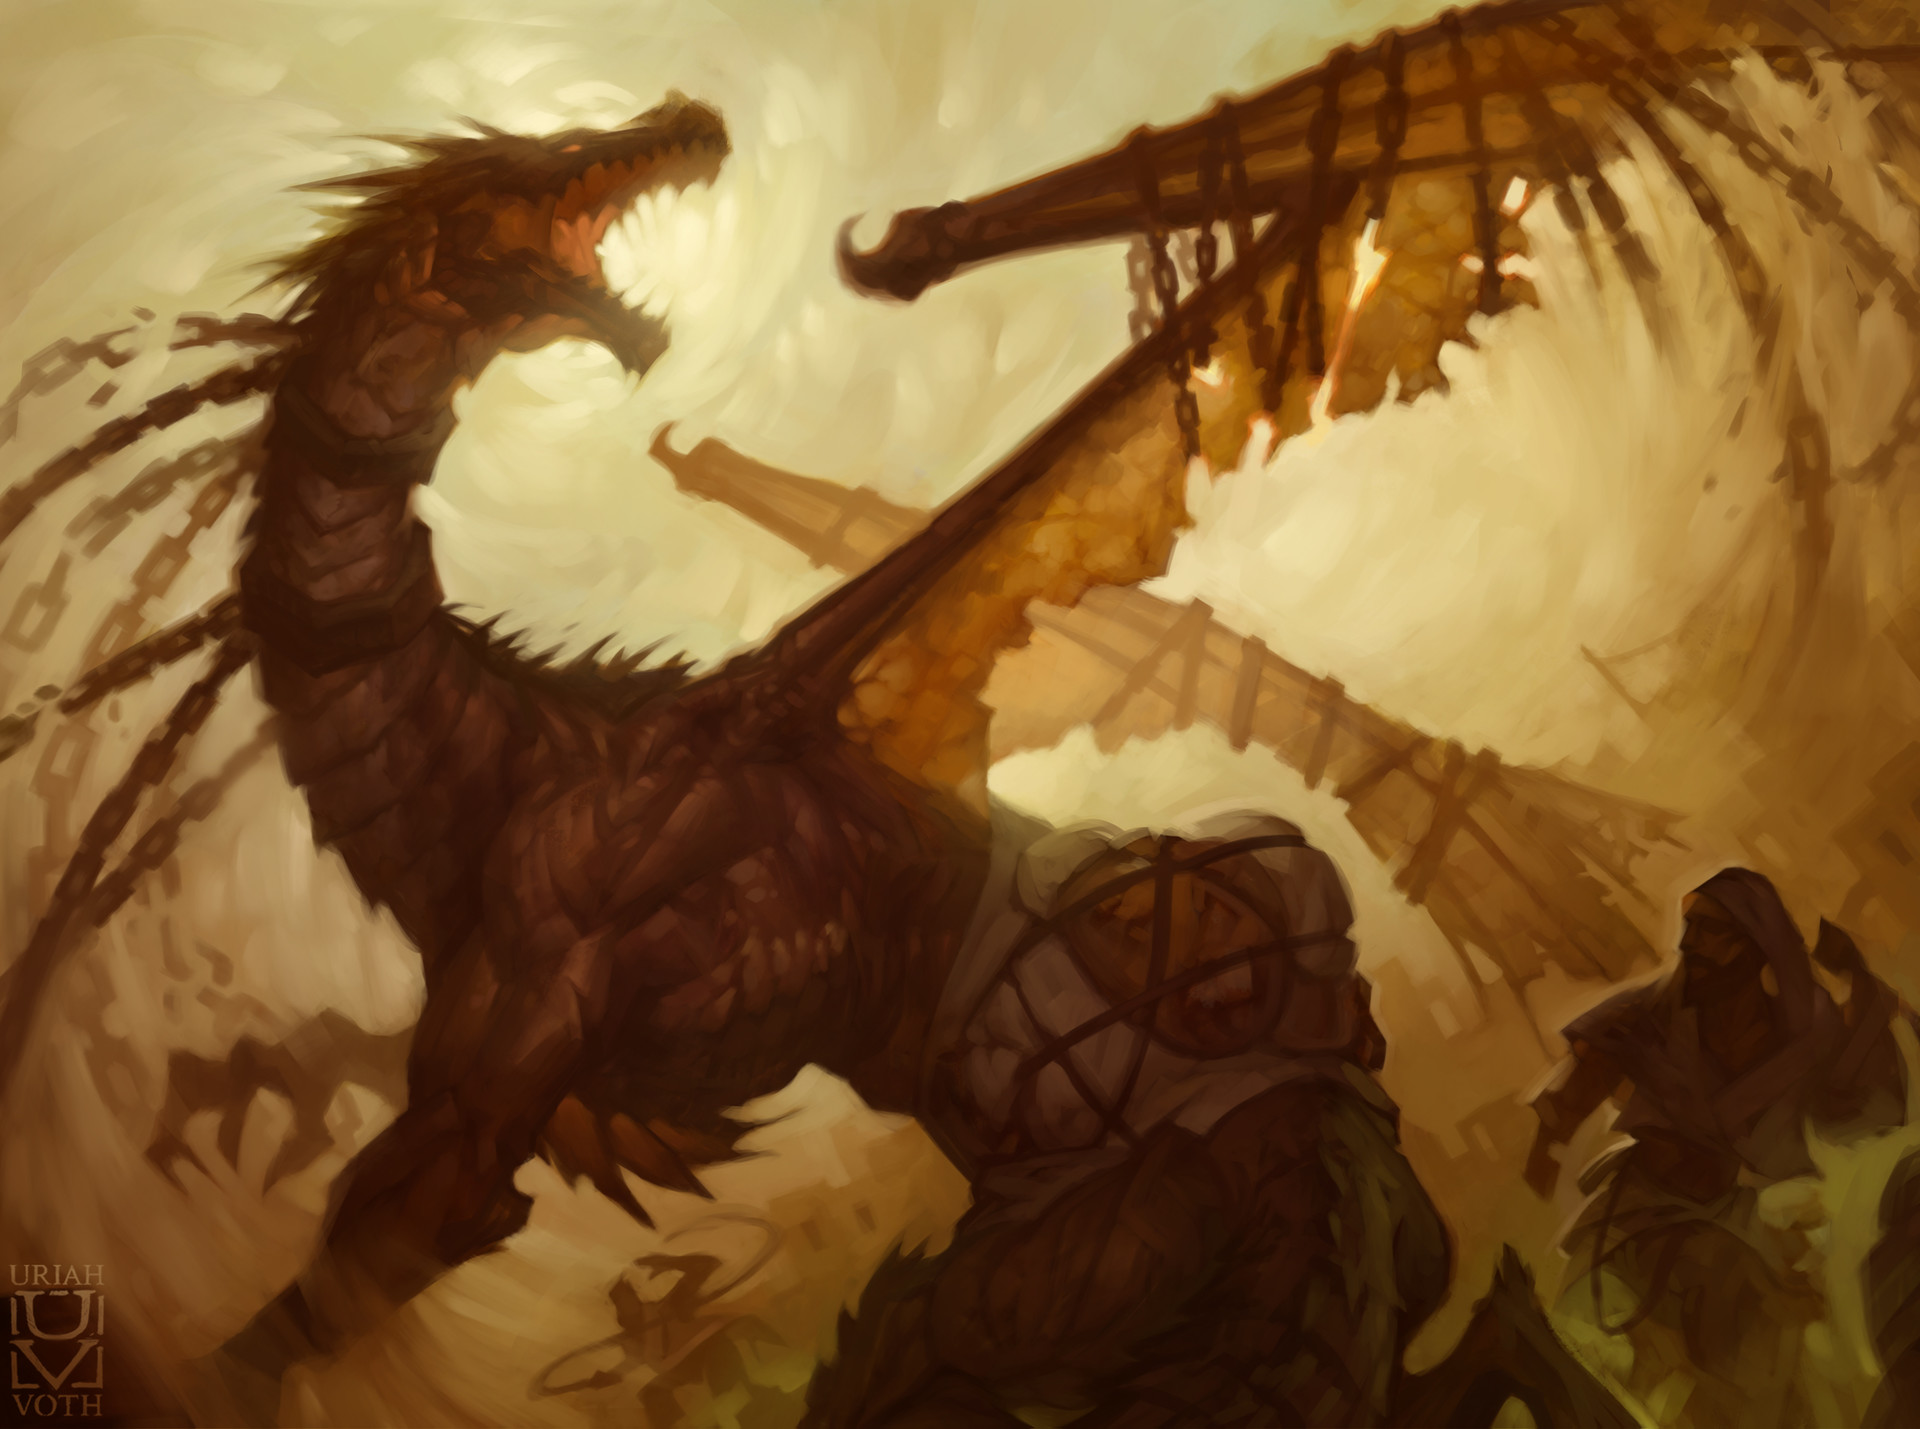 Enslaved Dragon by Uriah Voth - l'artboratoire